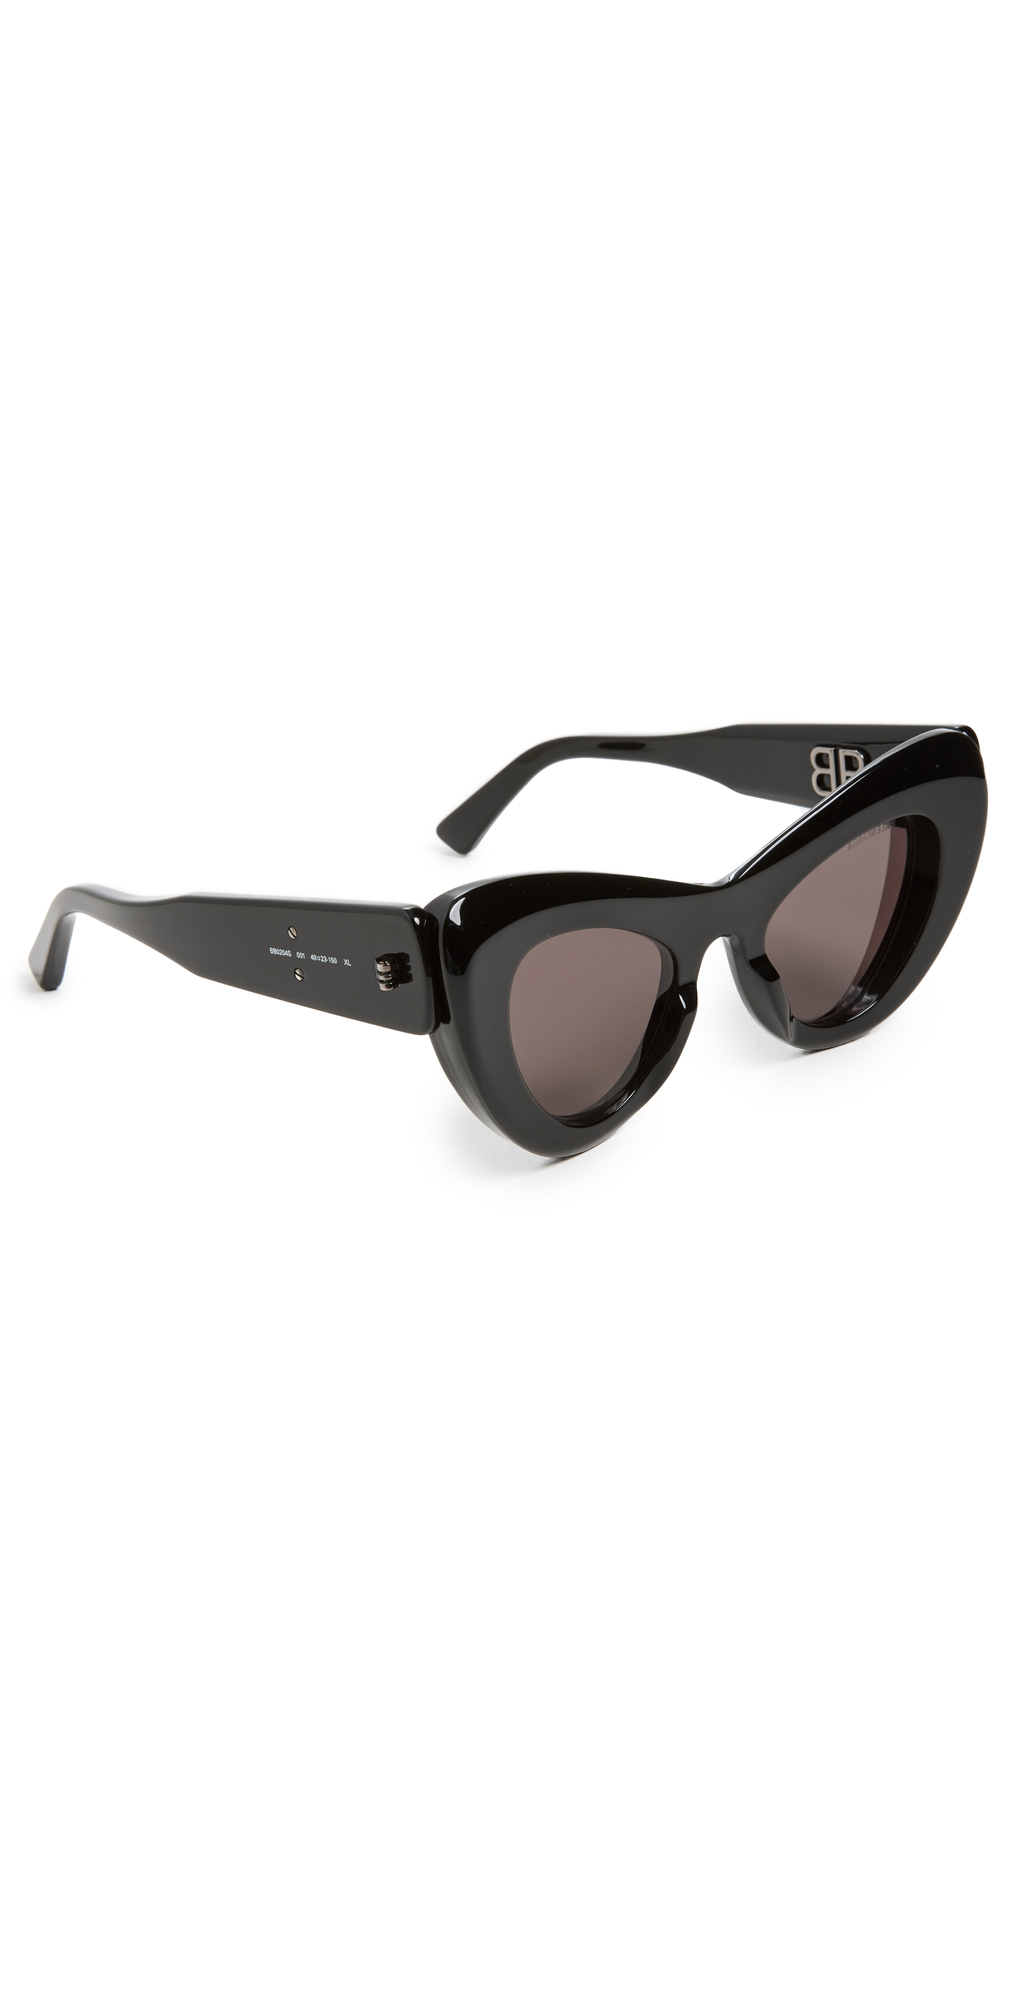 Balenciaga Mega Cat Eye Sunglasses in black / grey